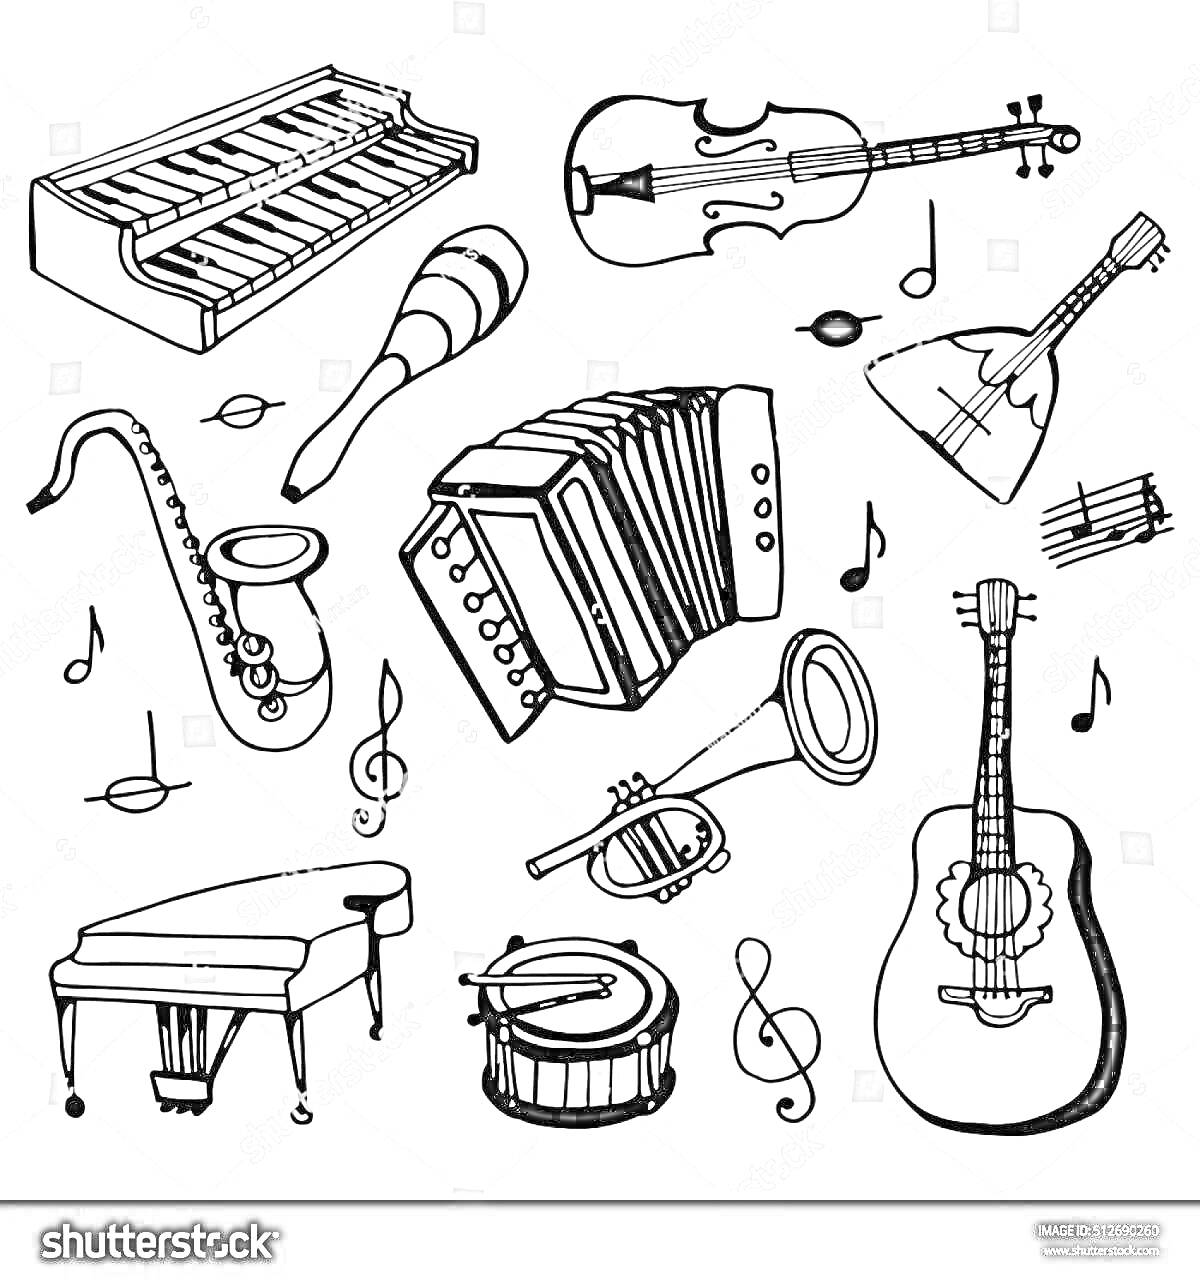 Раскраска Музыкальные инструменты: клавиши, маракасы, скрипка, балалайка, саксофон, аккордеон, труба, пианино, барабан, гитара, рожок, тромбон